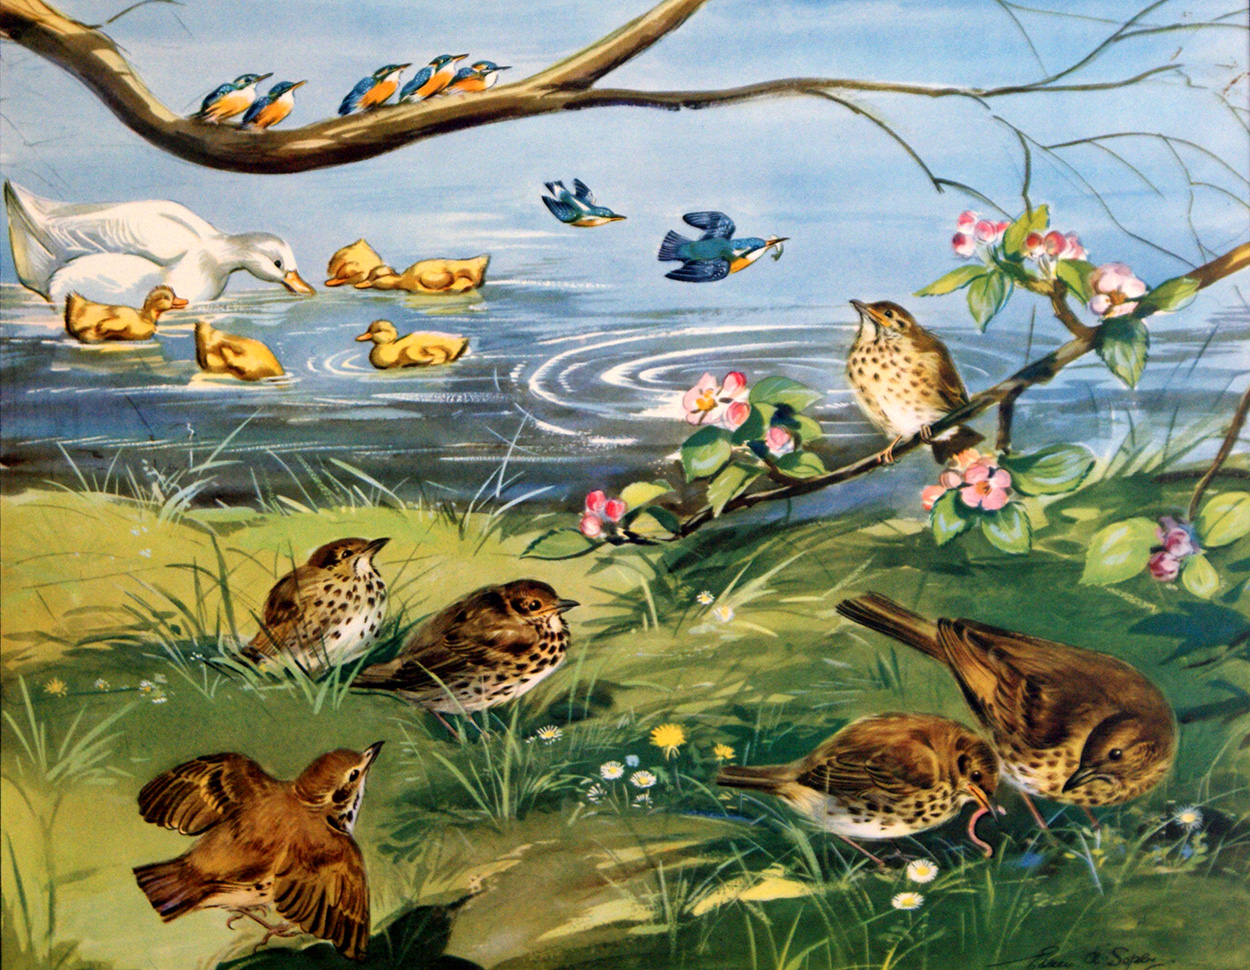 The Birds go to School (Original Macmillan Poster) (Print) art by Eileen Soper at The Illustration Art Gallery